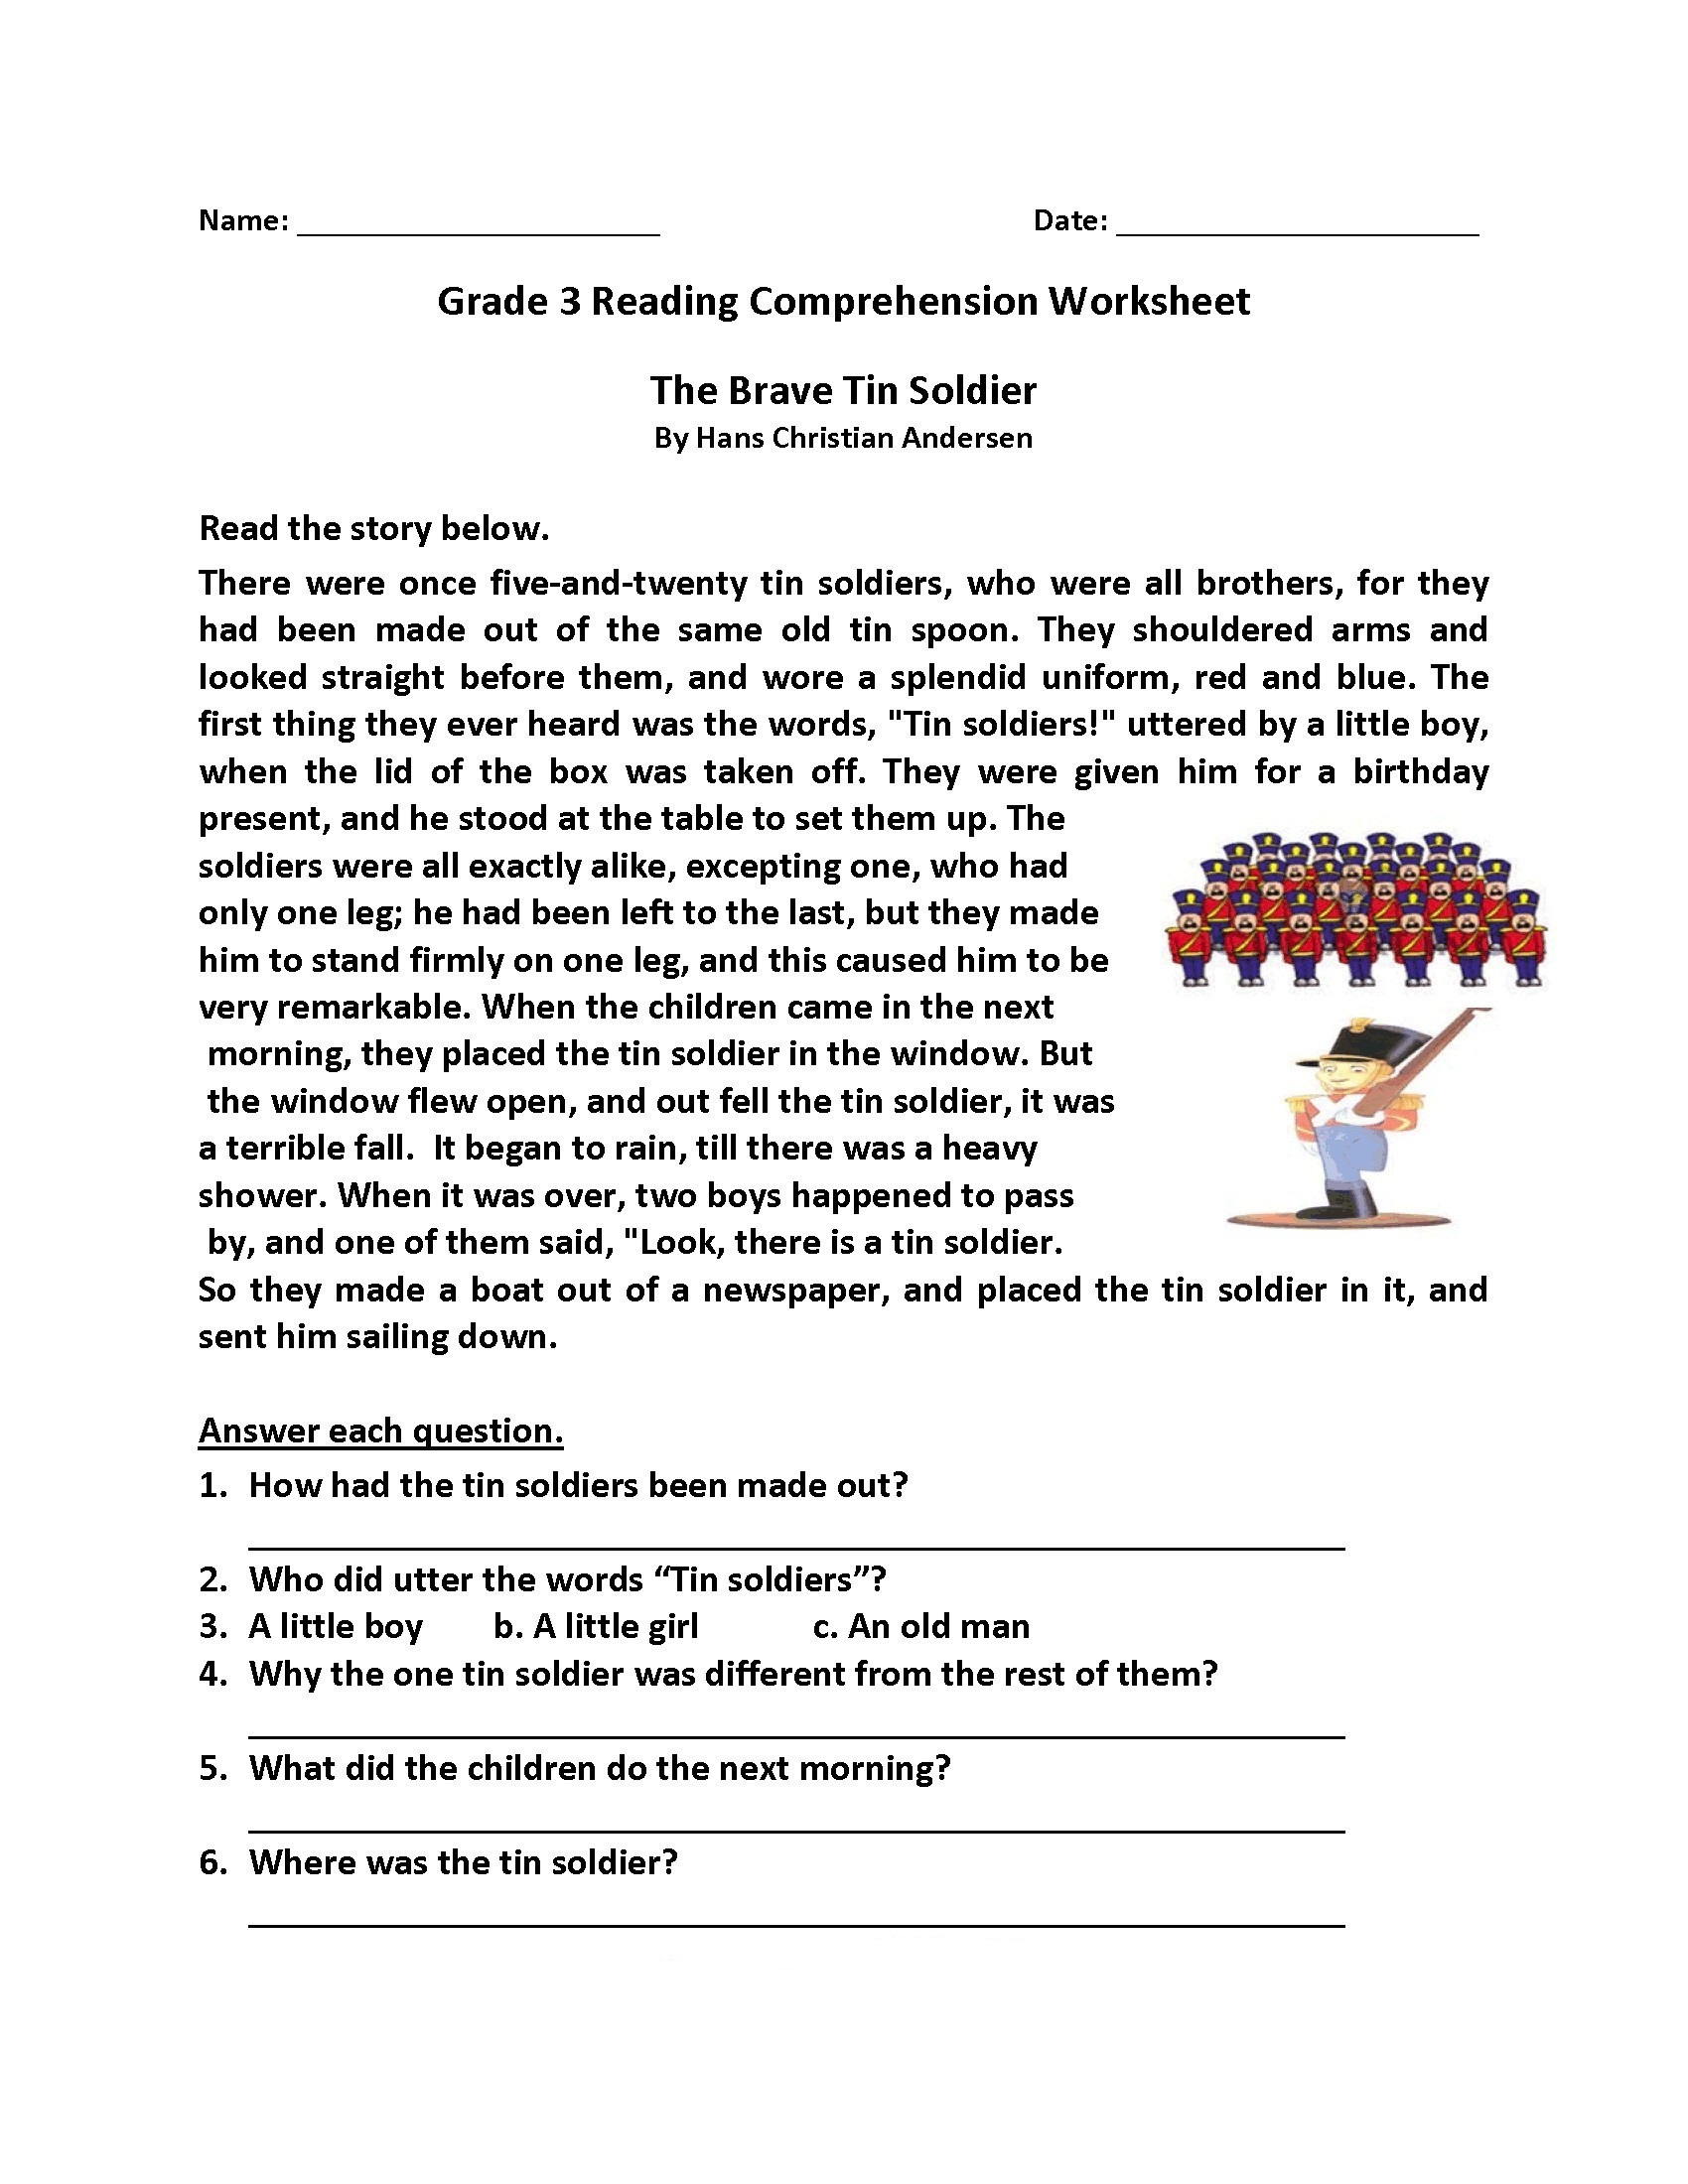 reading-comprehension-worksheets-for-grade-3-pdf-free-3rd-grade